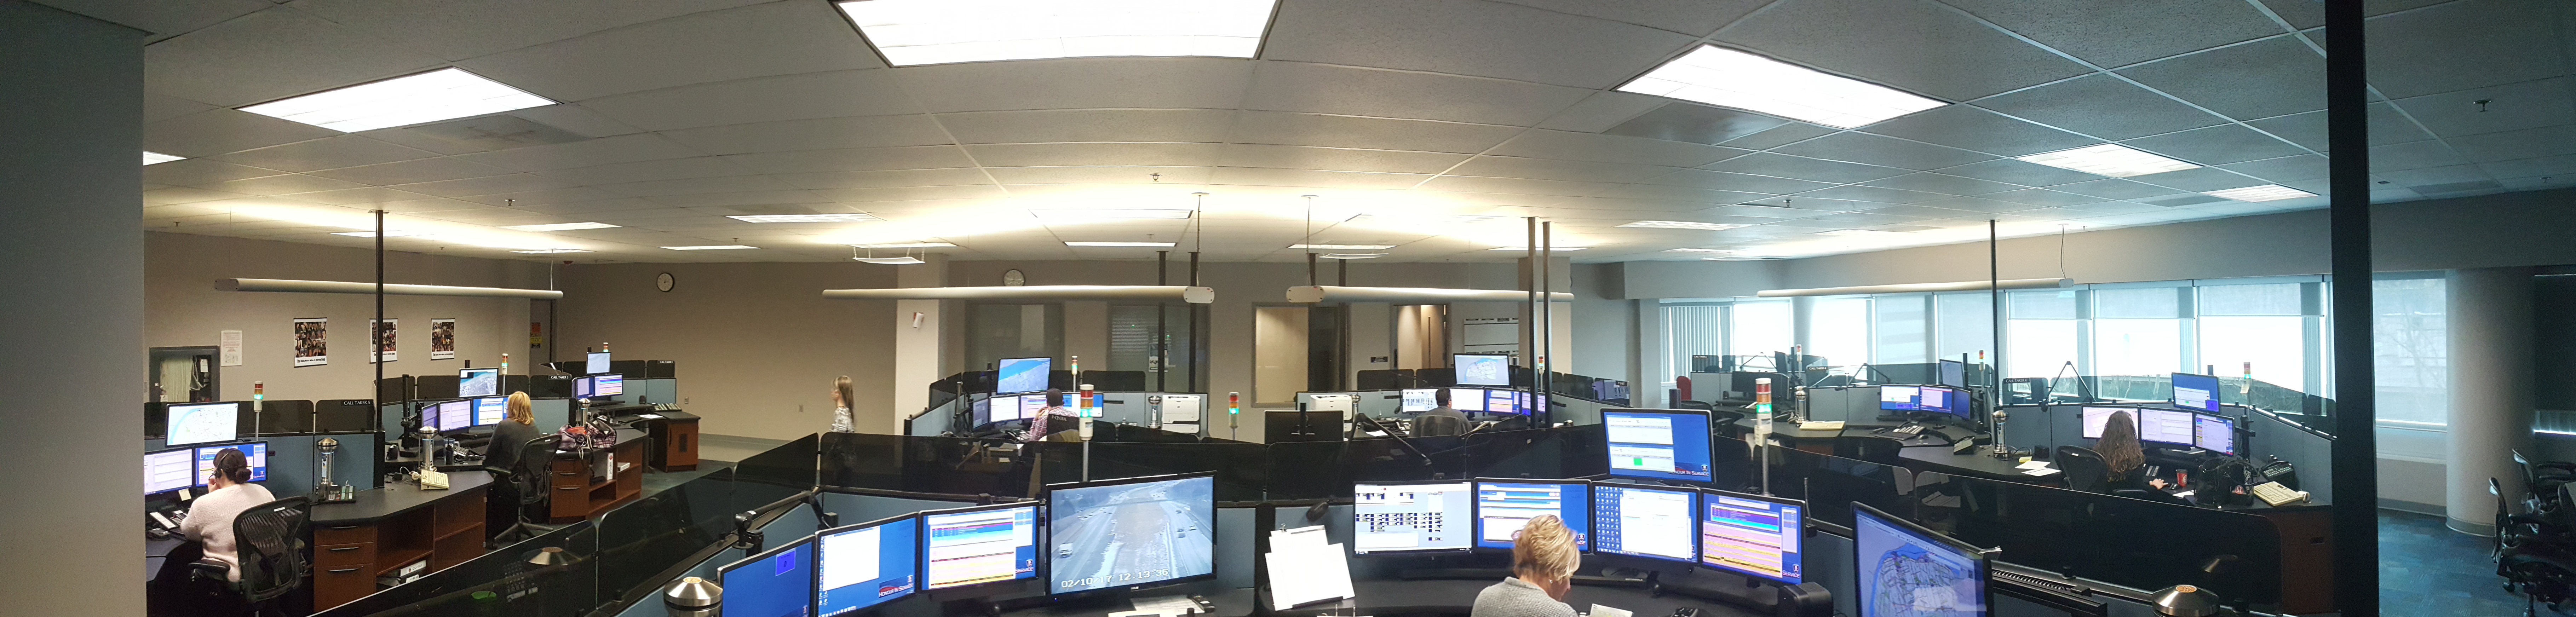 911 Centre Panoramic.jpg